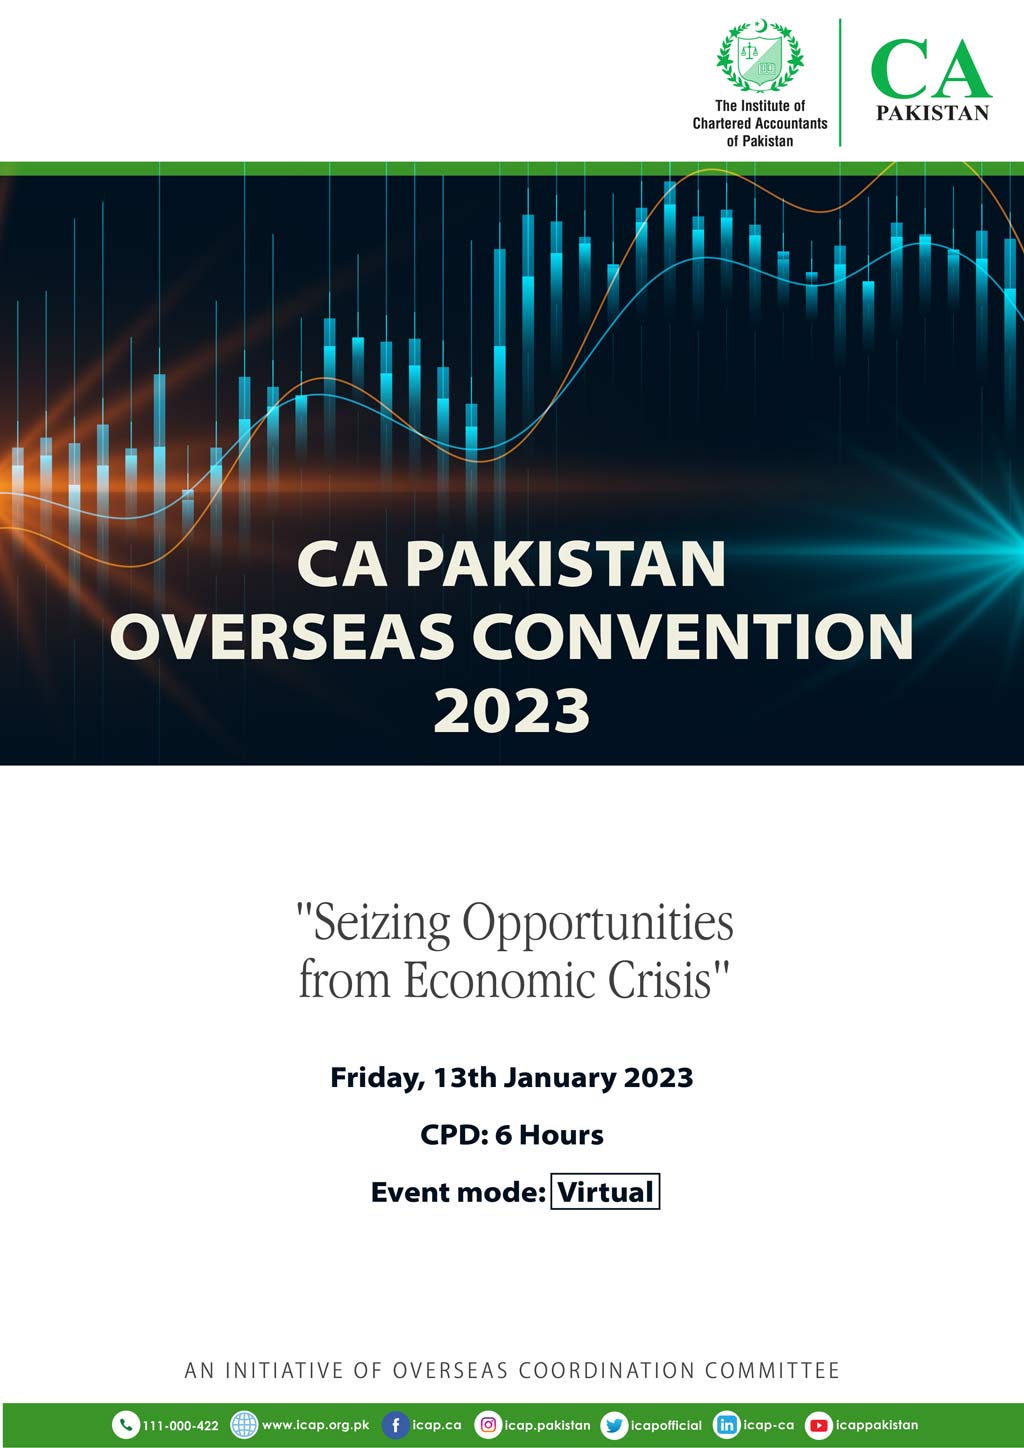 CA Pakistan overseas convention